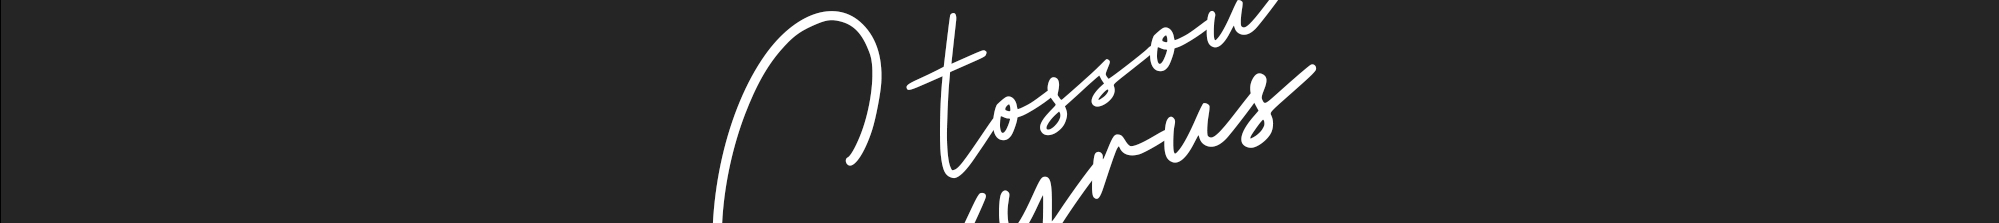 Cyrus TOSSOU ✪'s profile banner